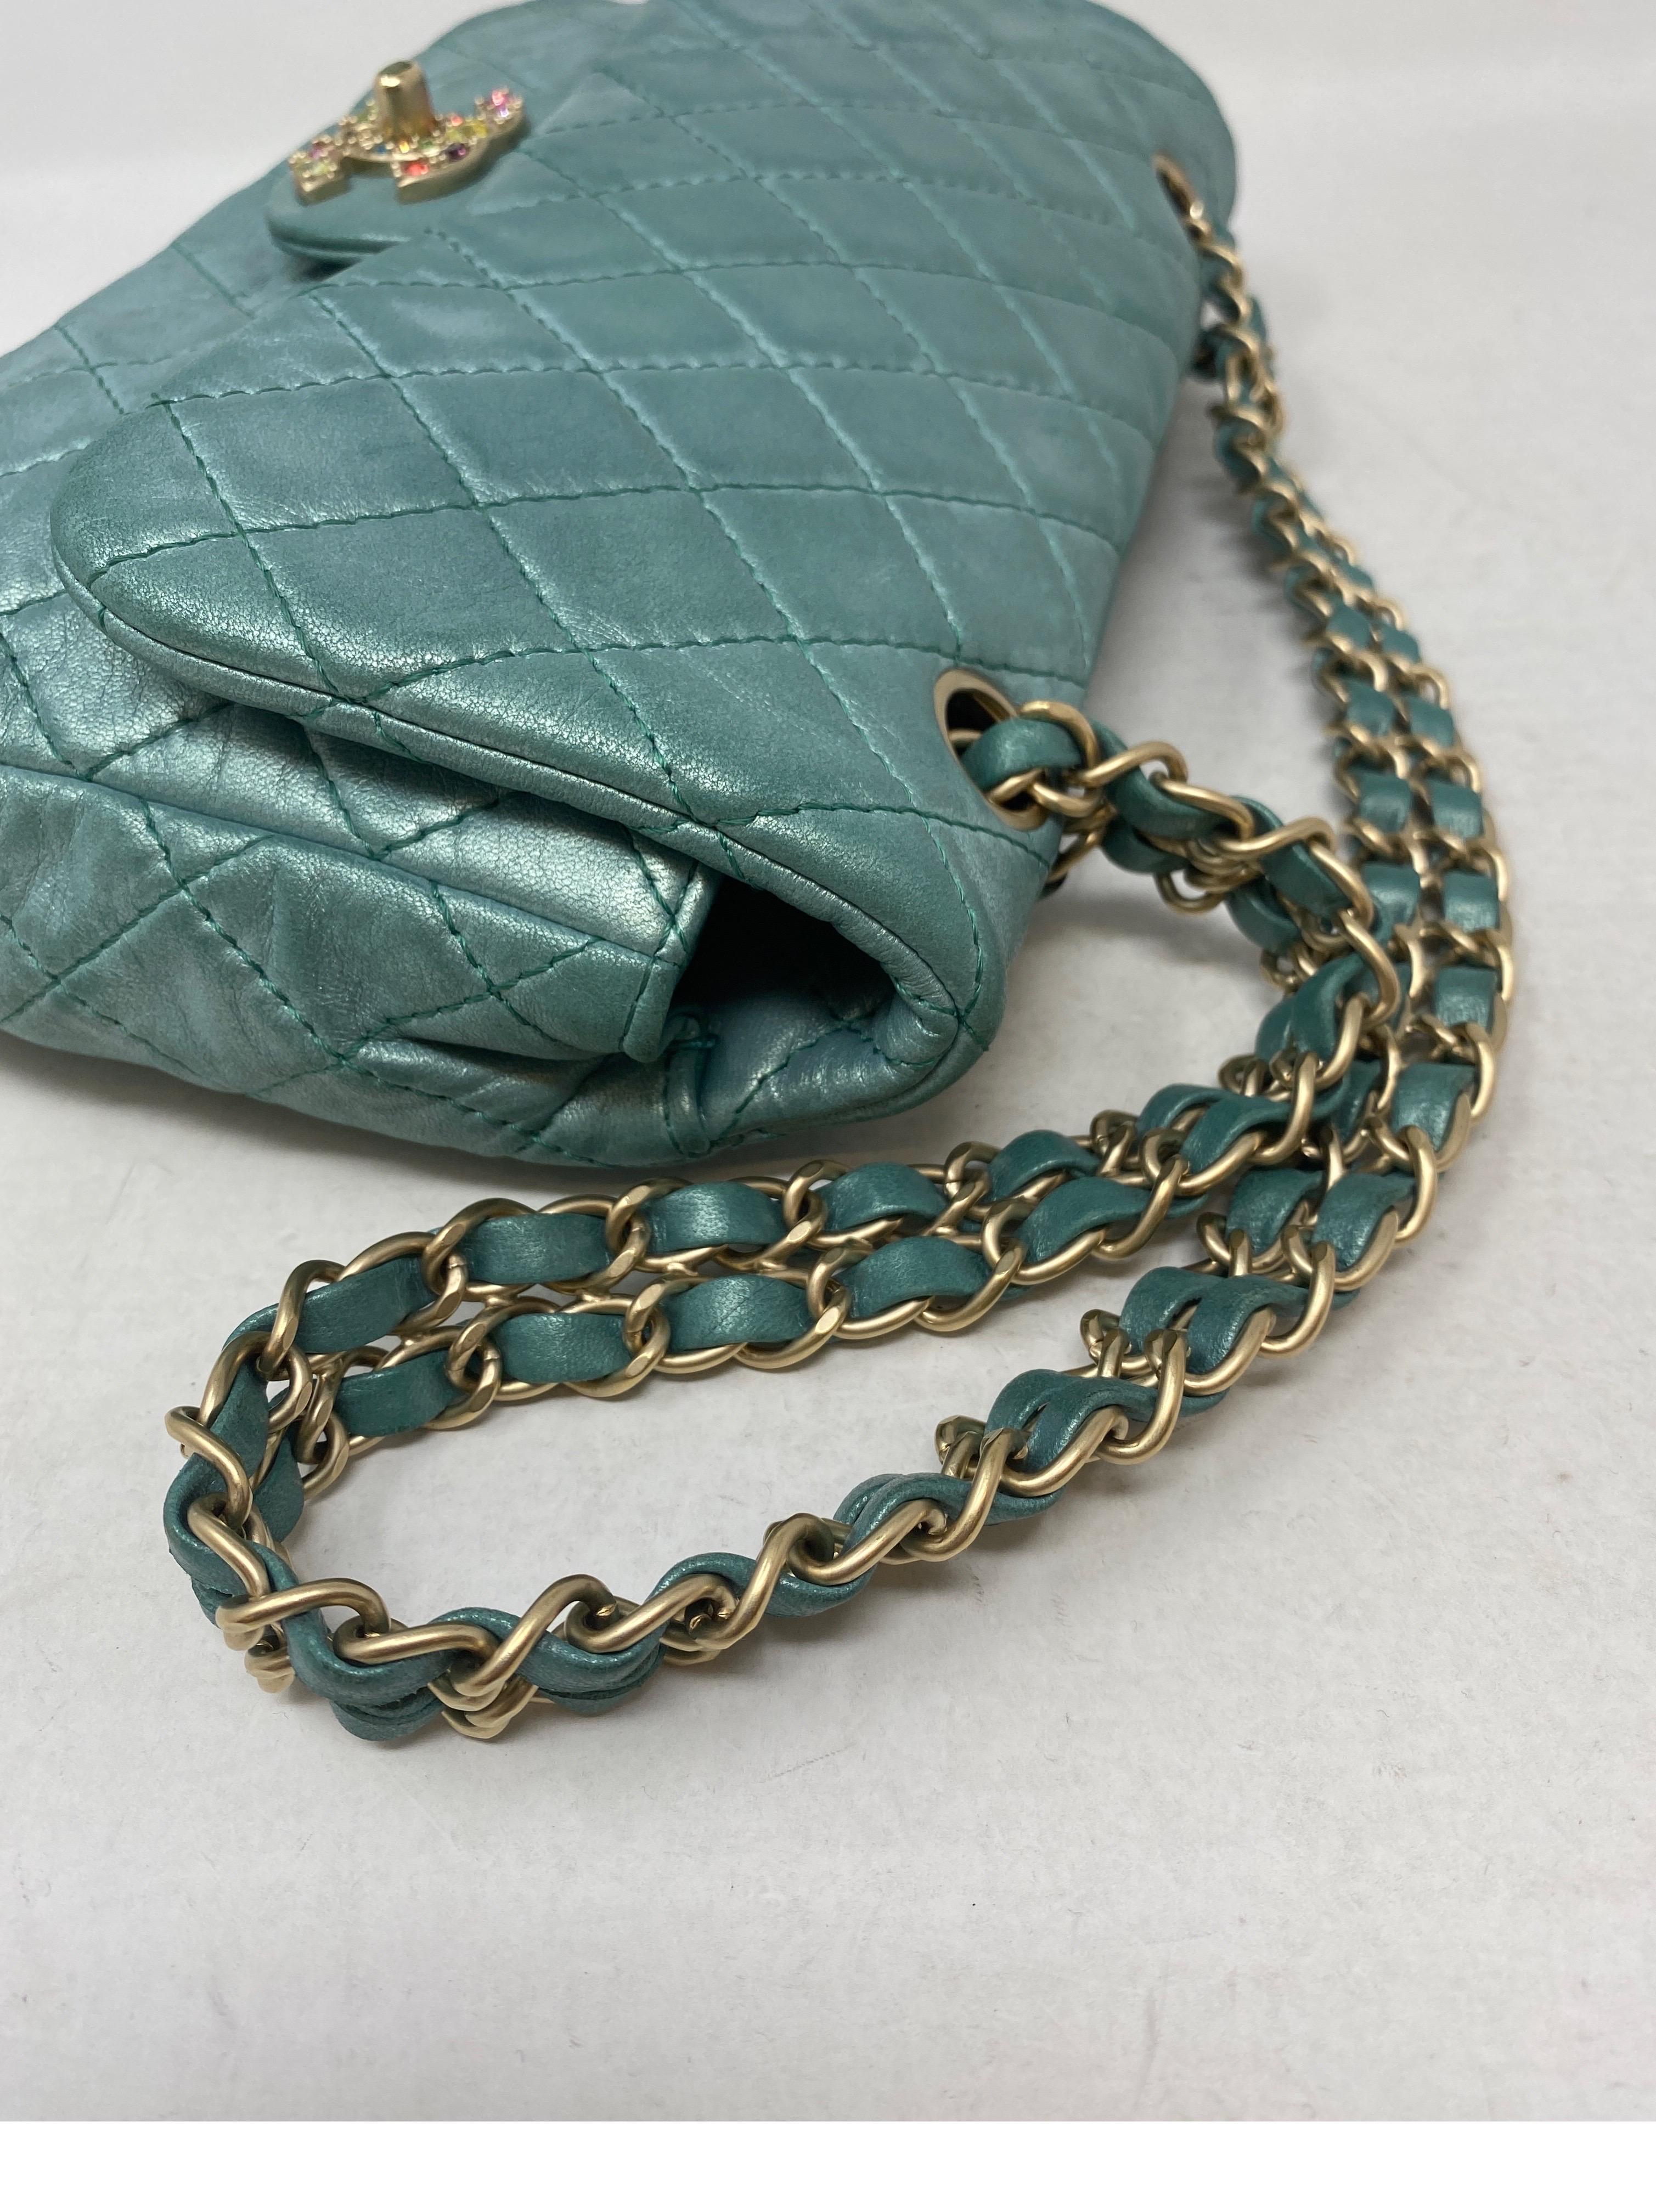 Chanel Teal Jeweled Bag  13